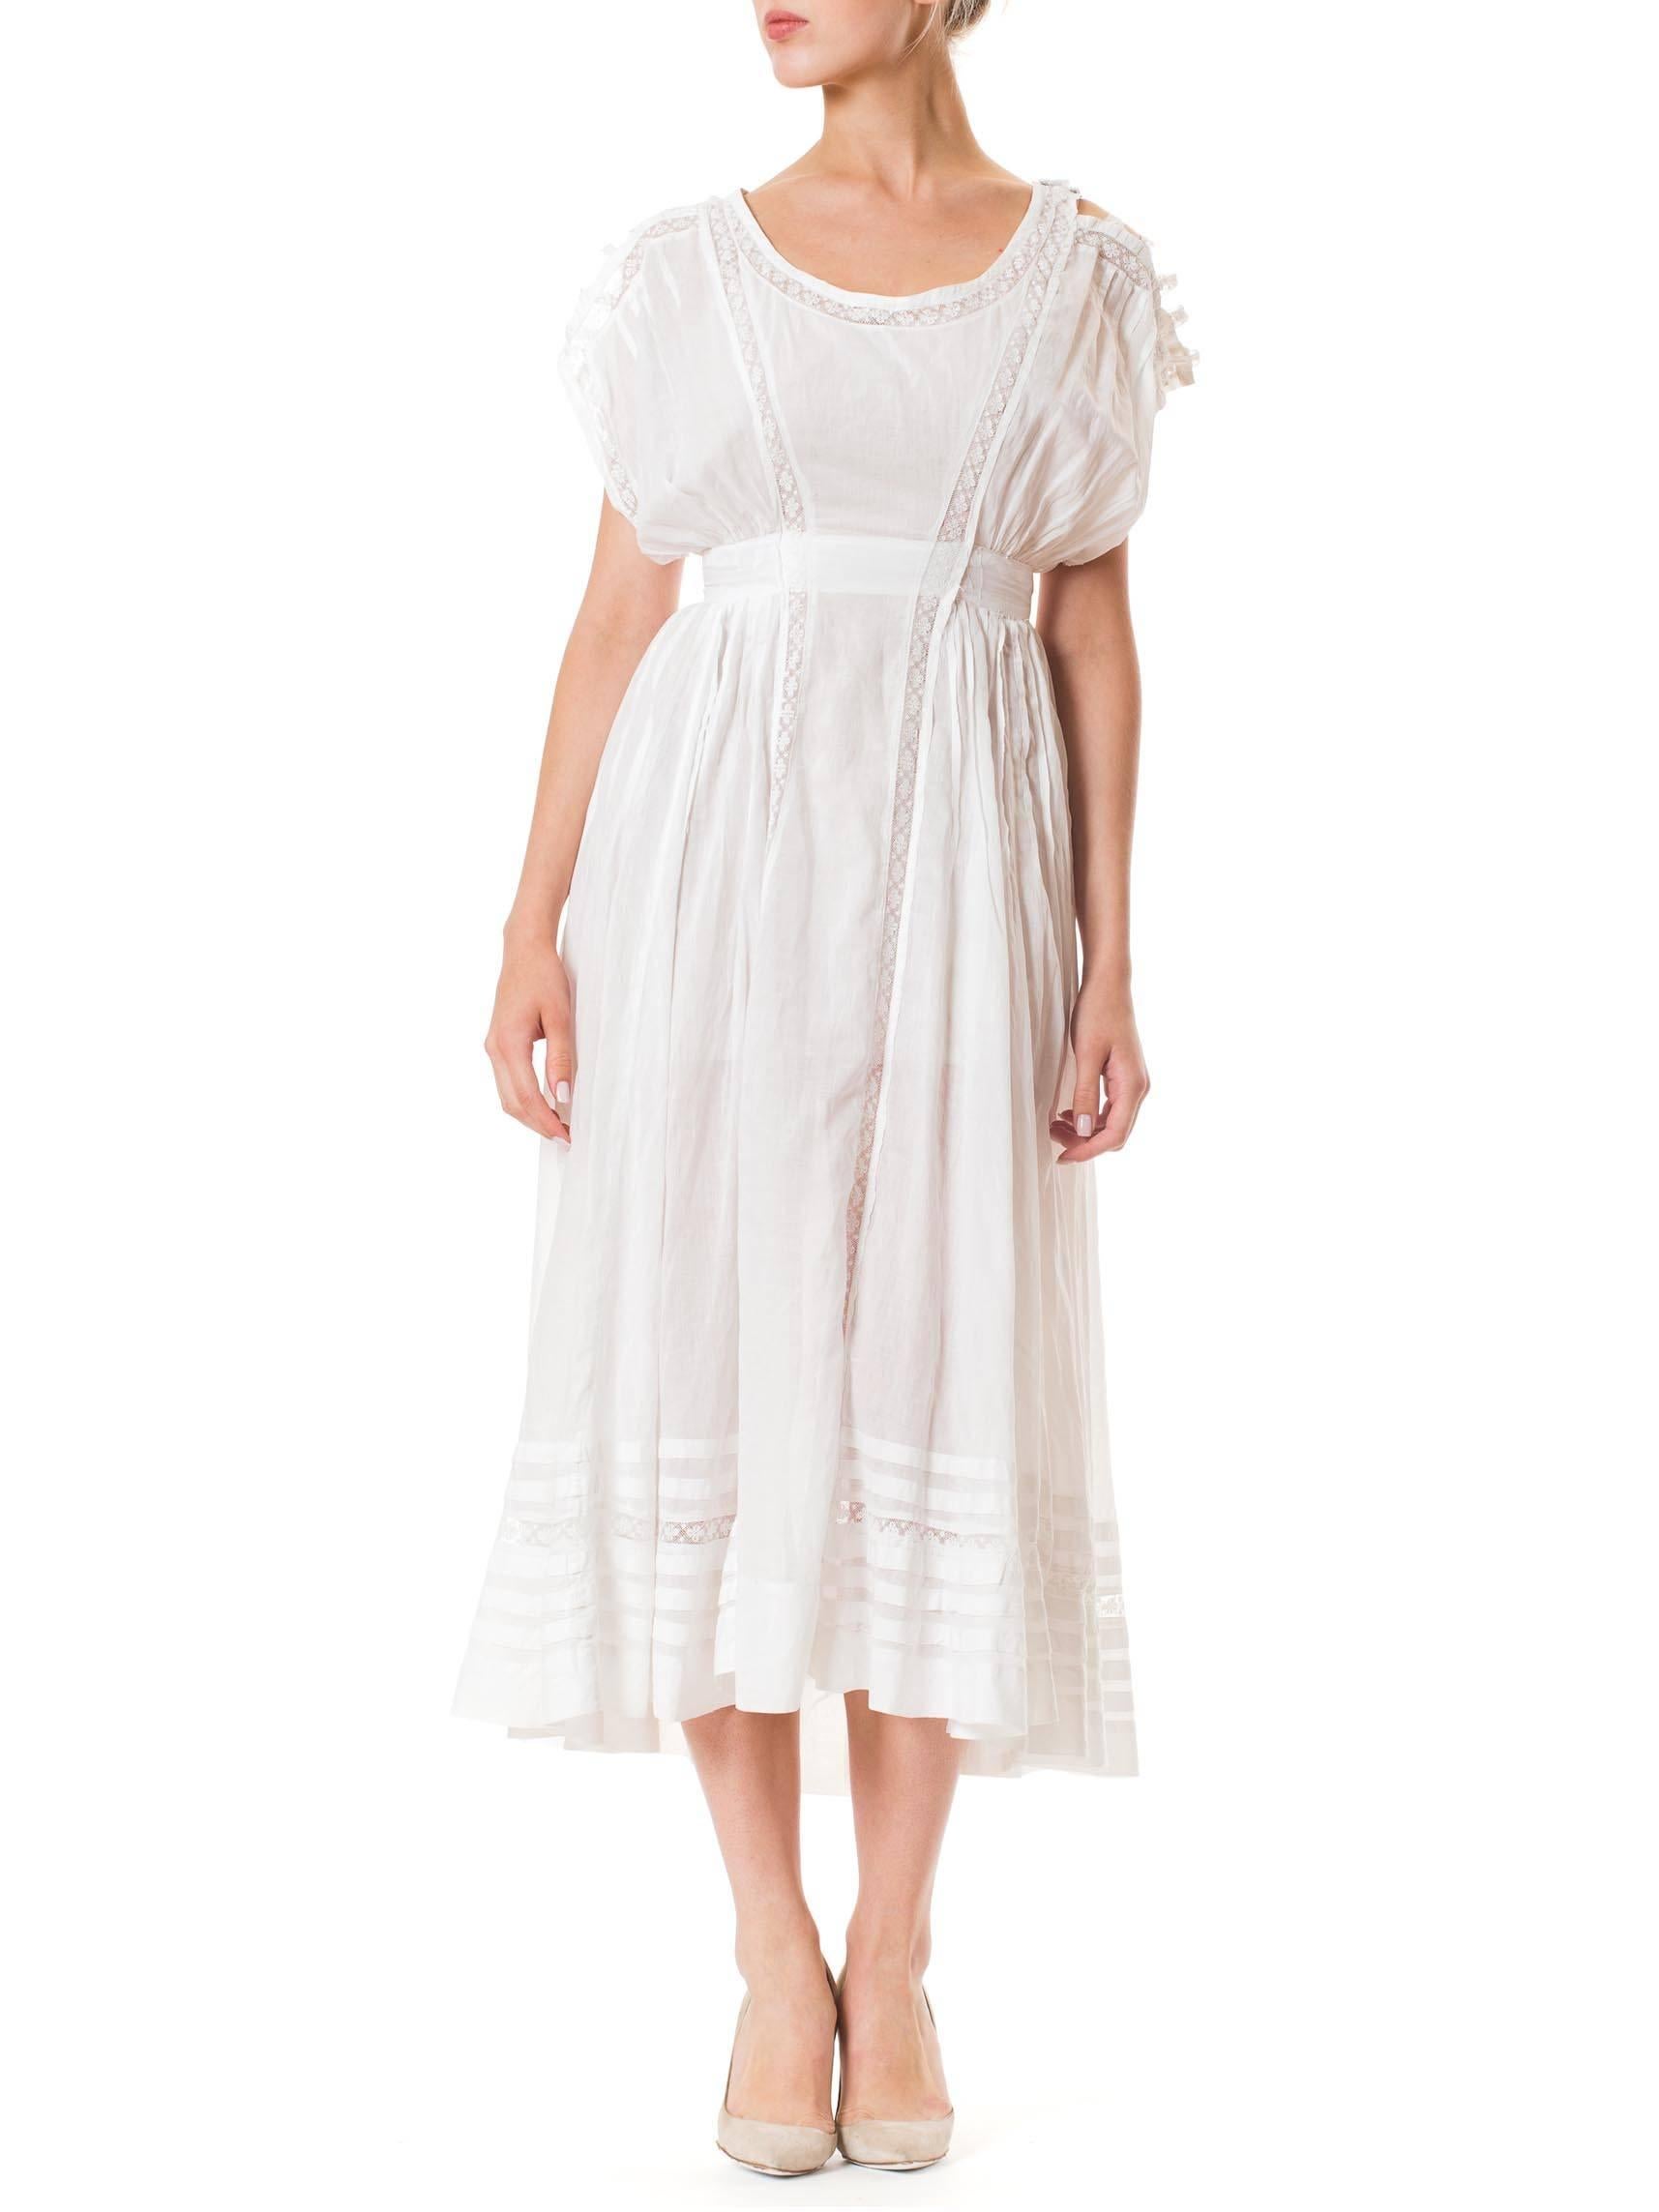 cotton batiste dress